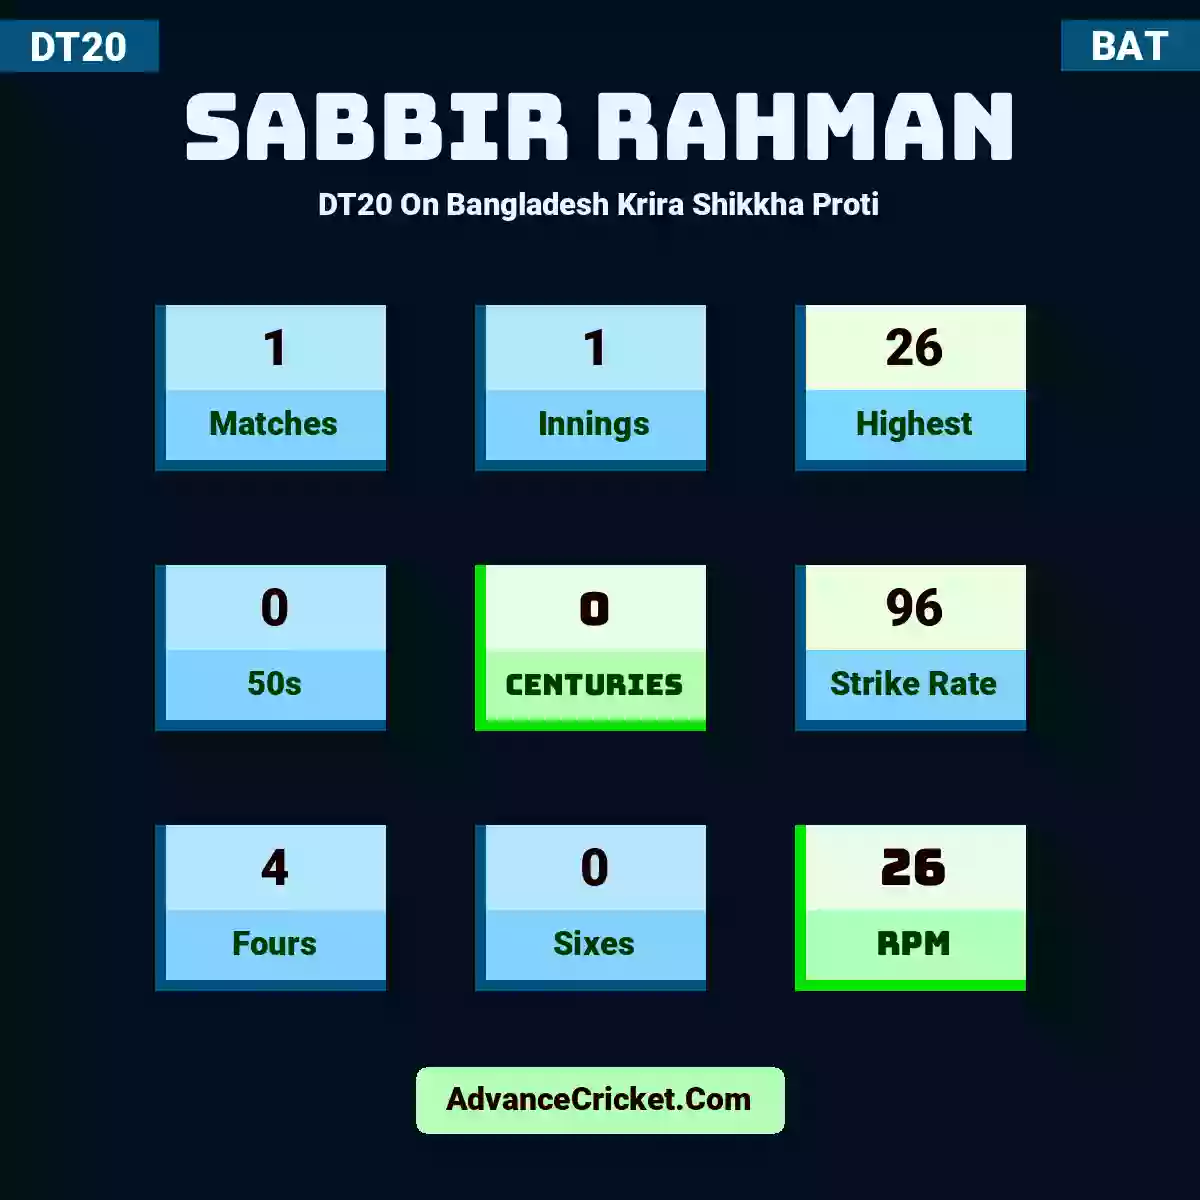 Sabbir Rahman DT20  On Bangladesh Krira Shikkha Proti, Sabbir Rahman played 1 matches, scored 26 runs as highest, 0 half-centuries, and 0 centuries, with a strike rate of 96. S.Rahman hit 4 fours and 0 sixes, with an RPM of 26.